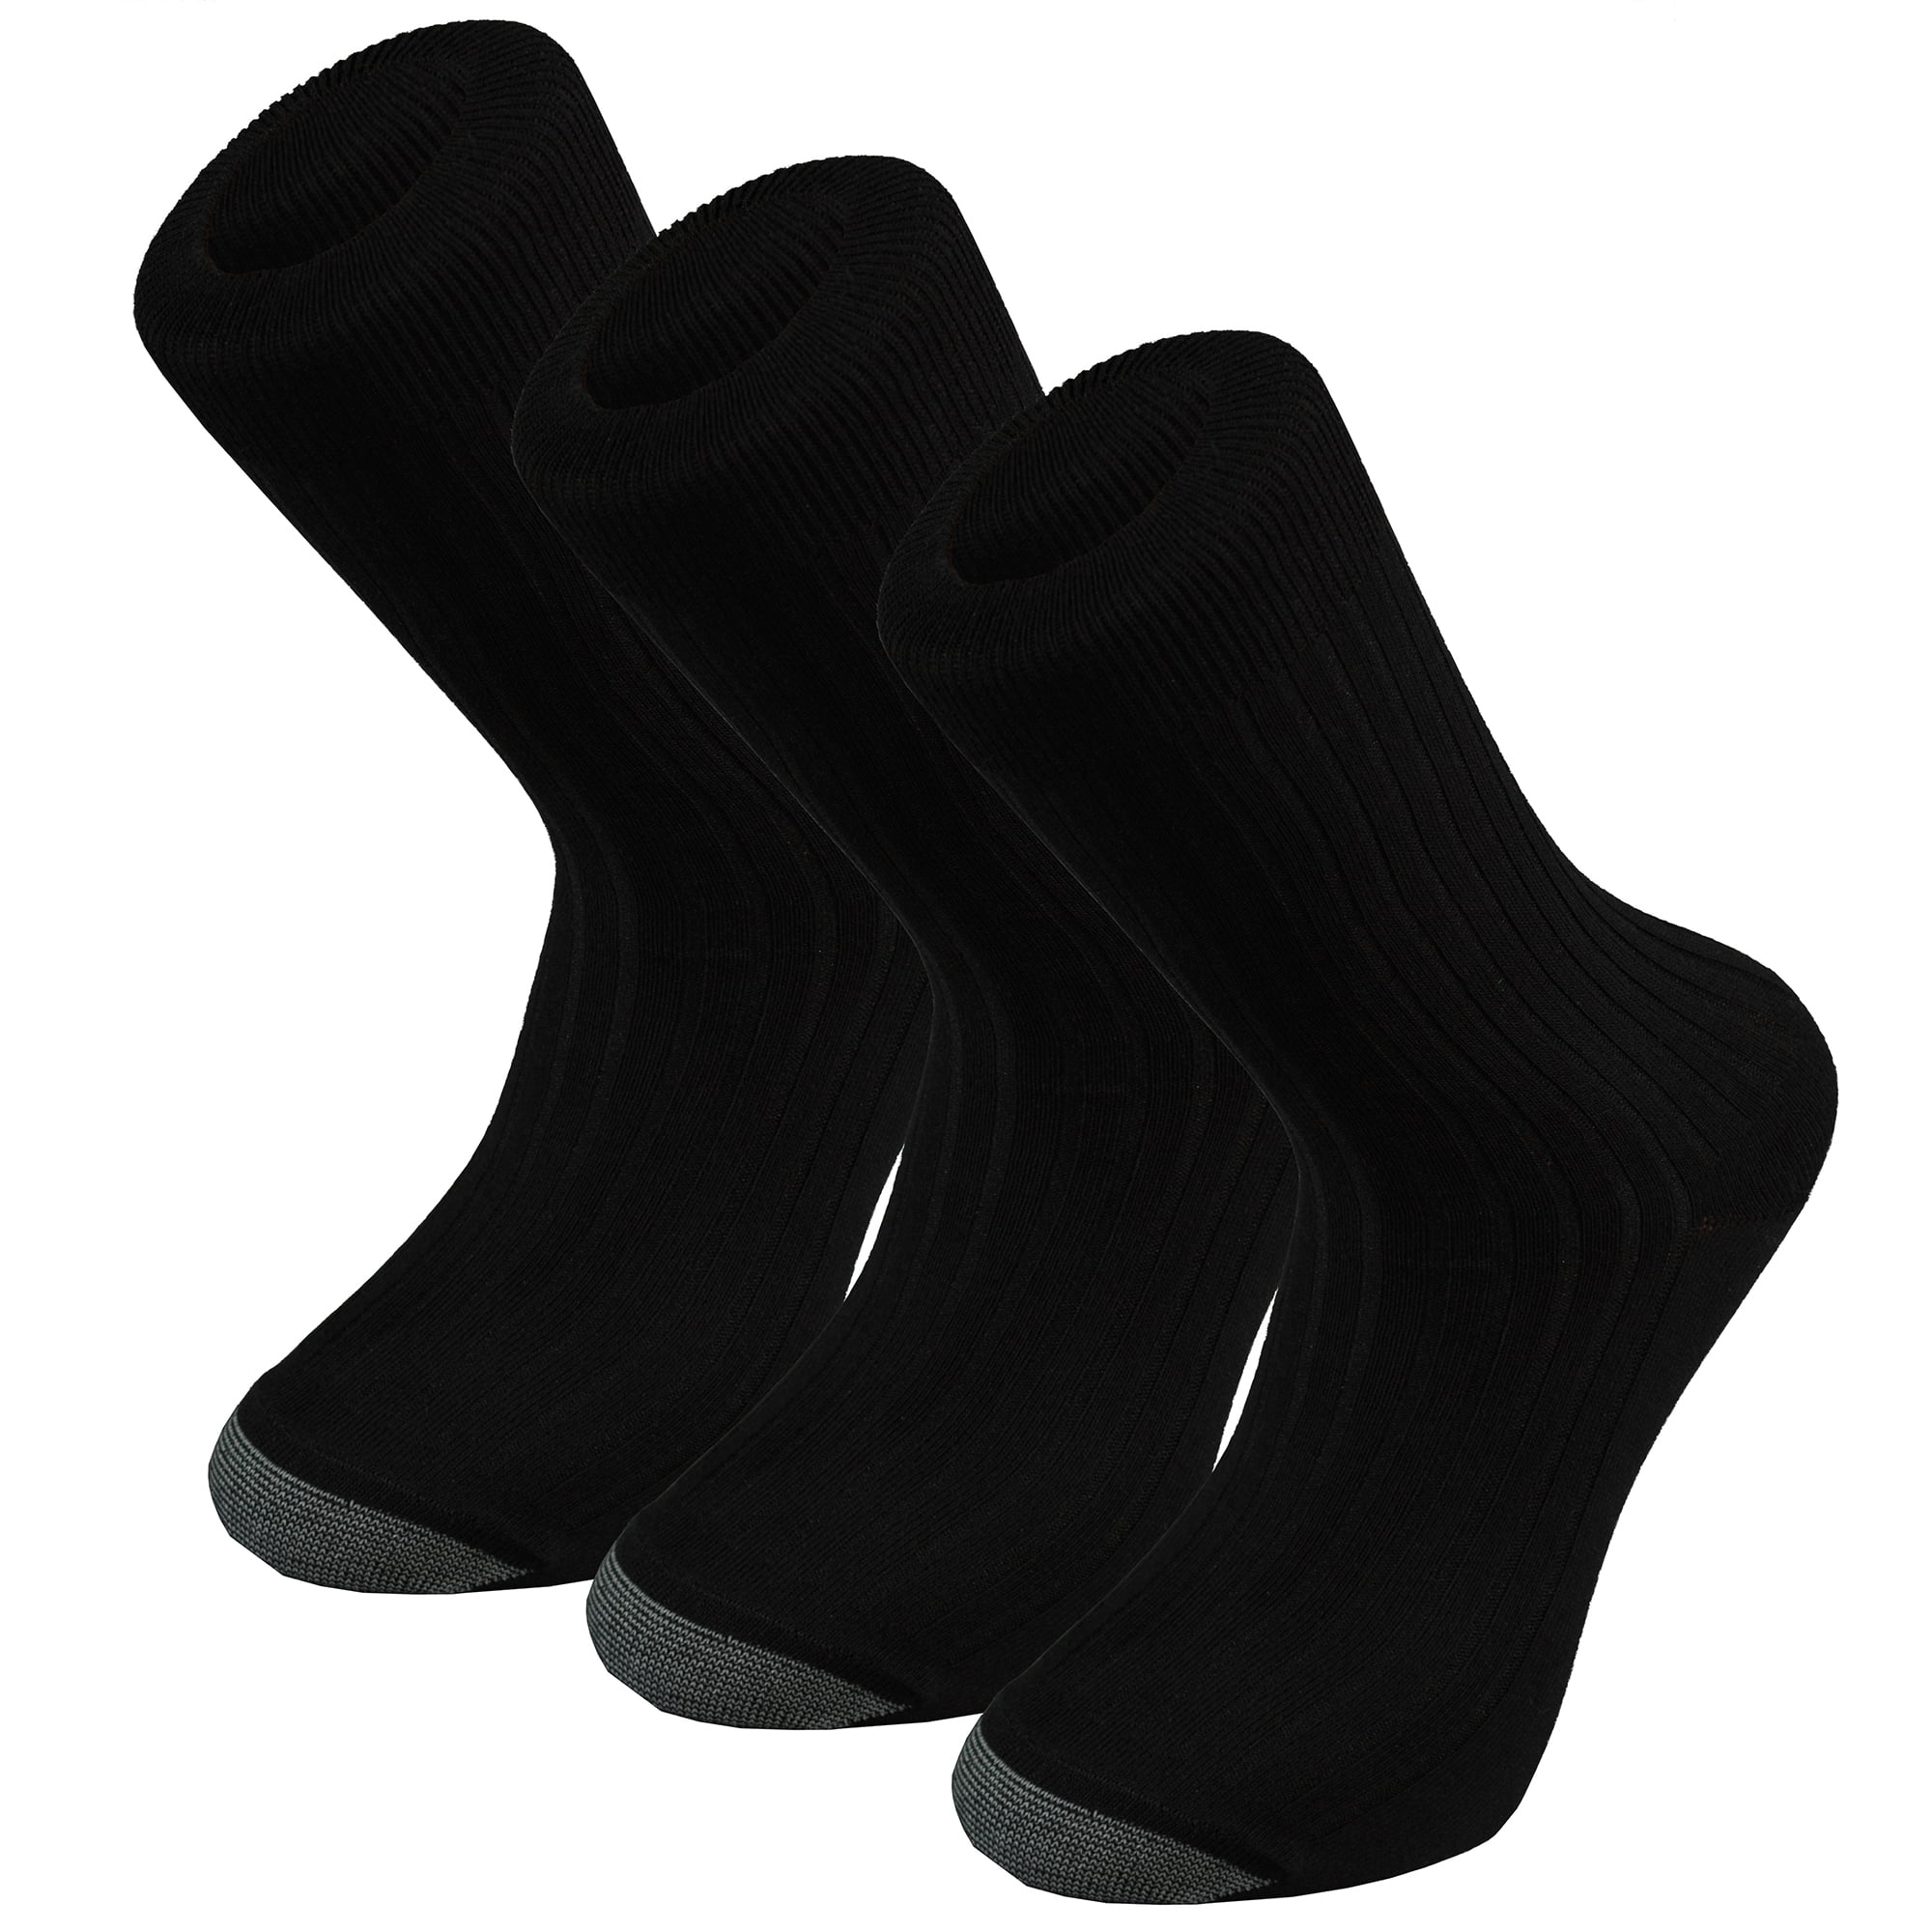 Men's Cotton Ribbed Black Dress Socks,3 Pack,Sock Size 9.5-11 - Walmart.com